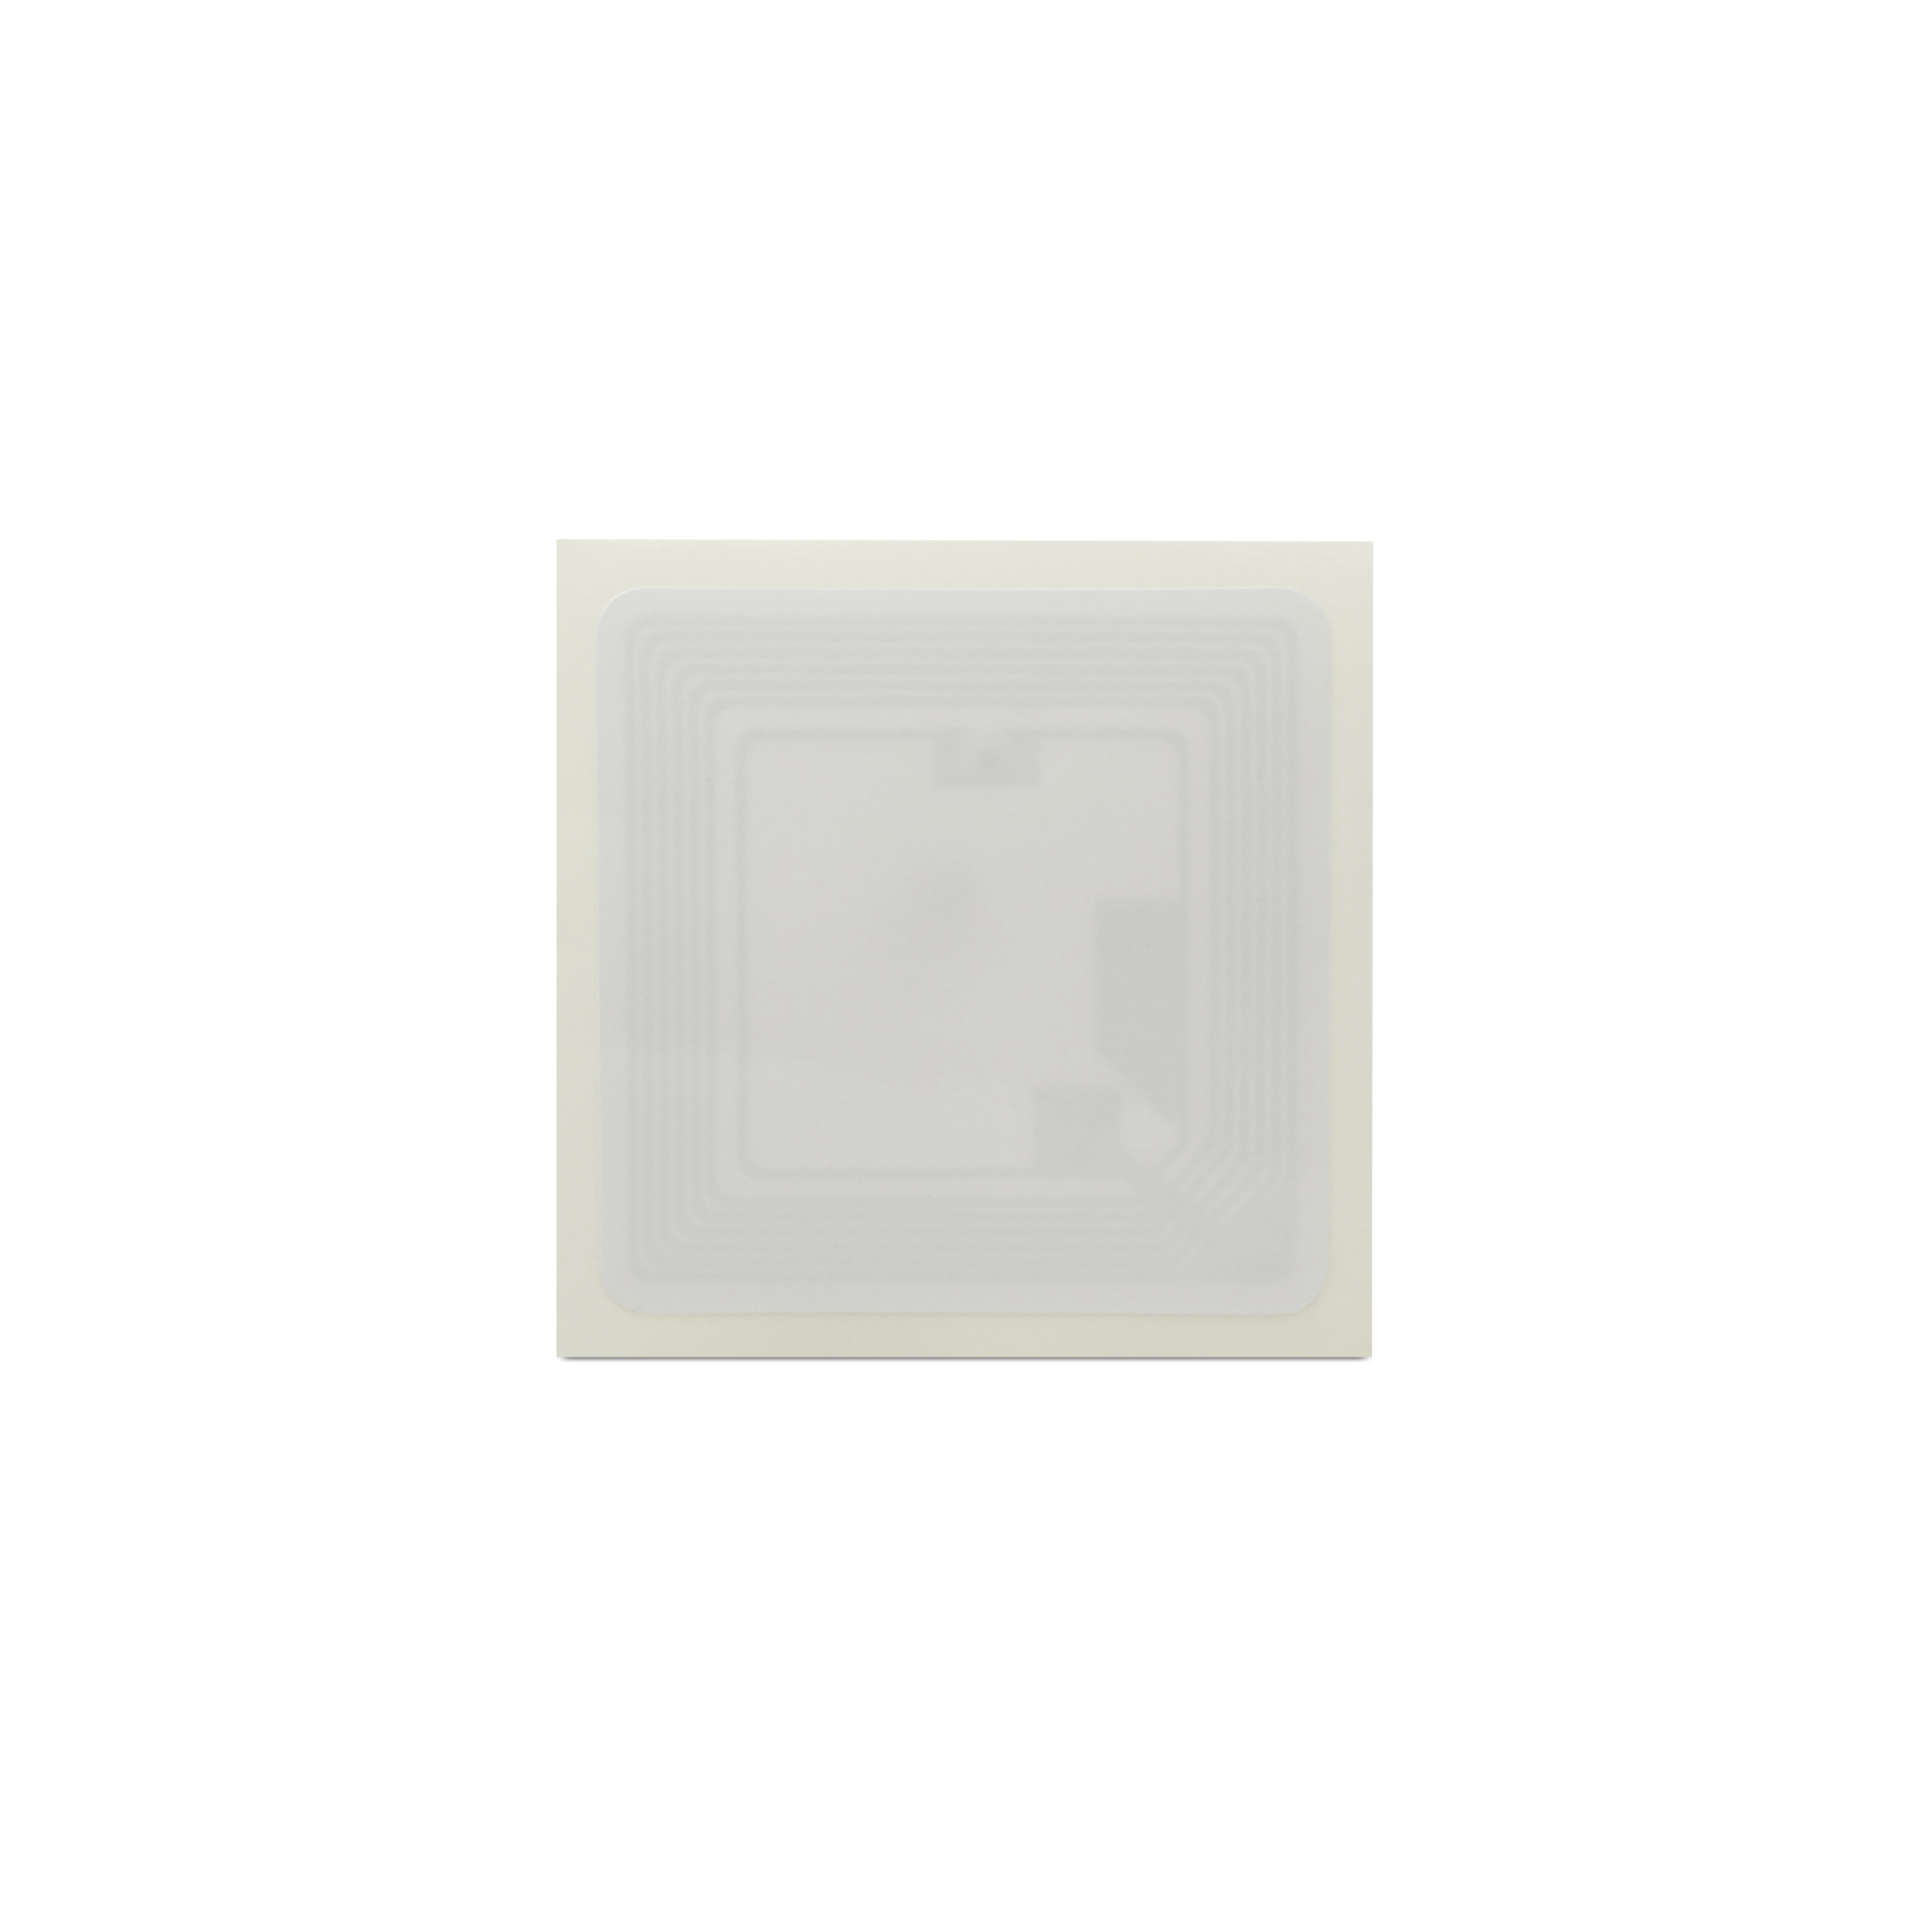 NFC Sticker PET - 35 x 35 mm - NTAG213 - 180 Byte - square - white 